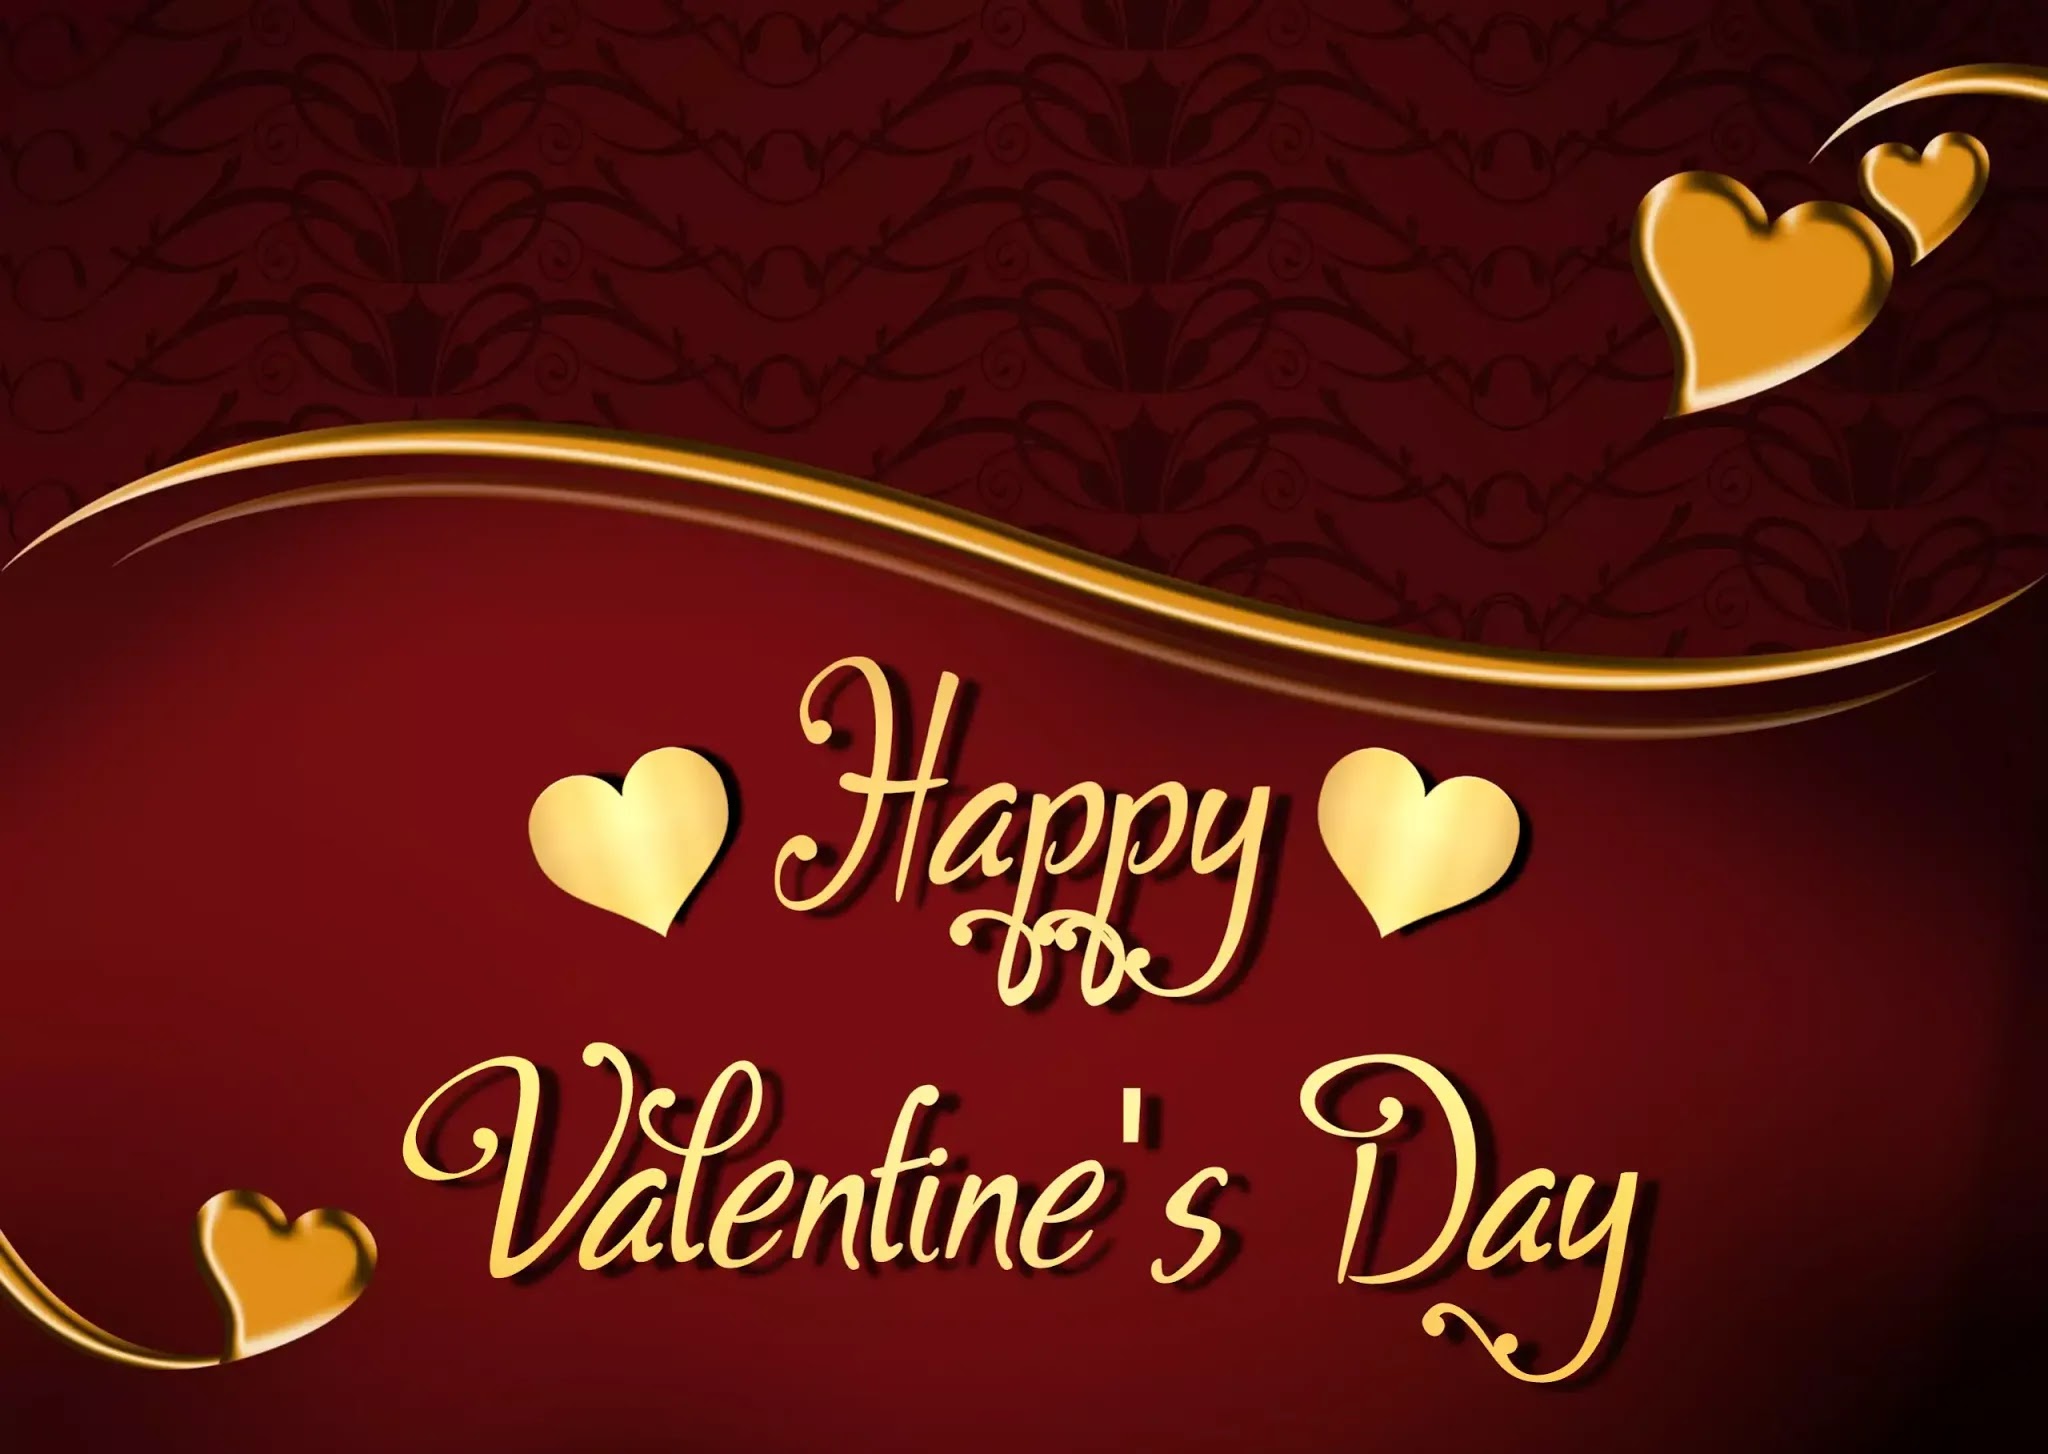 Pic of Valentine's Day Wish, Happy Valentine's Day Image